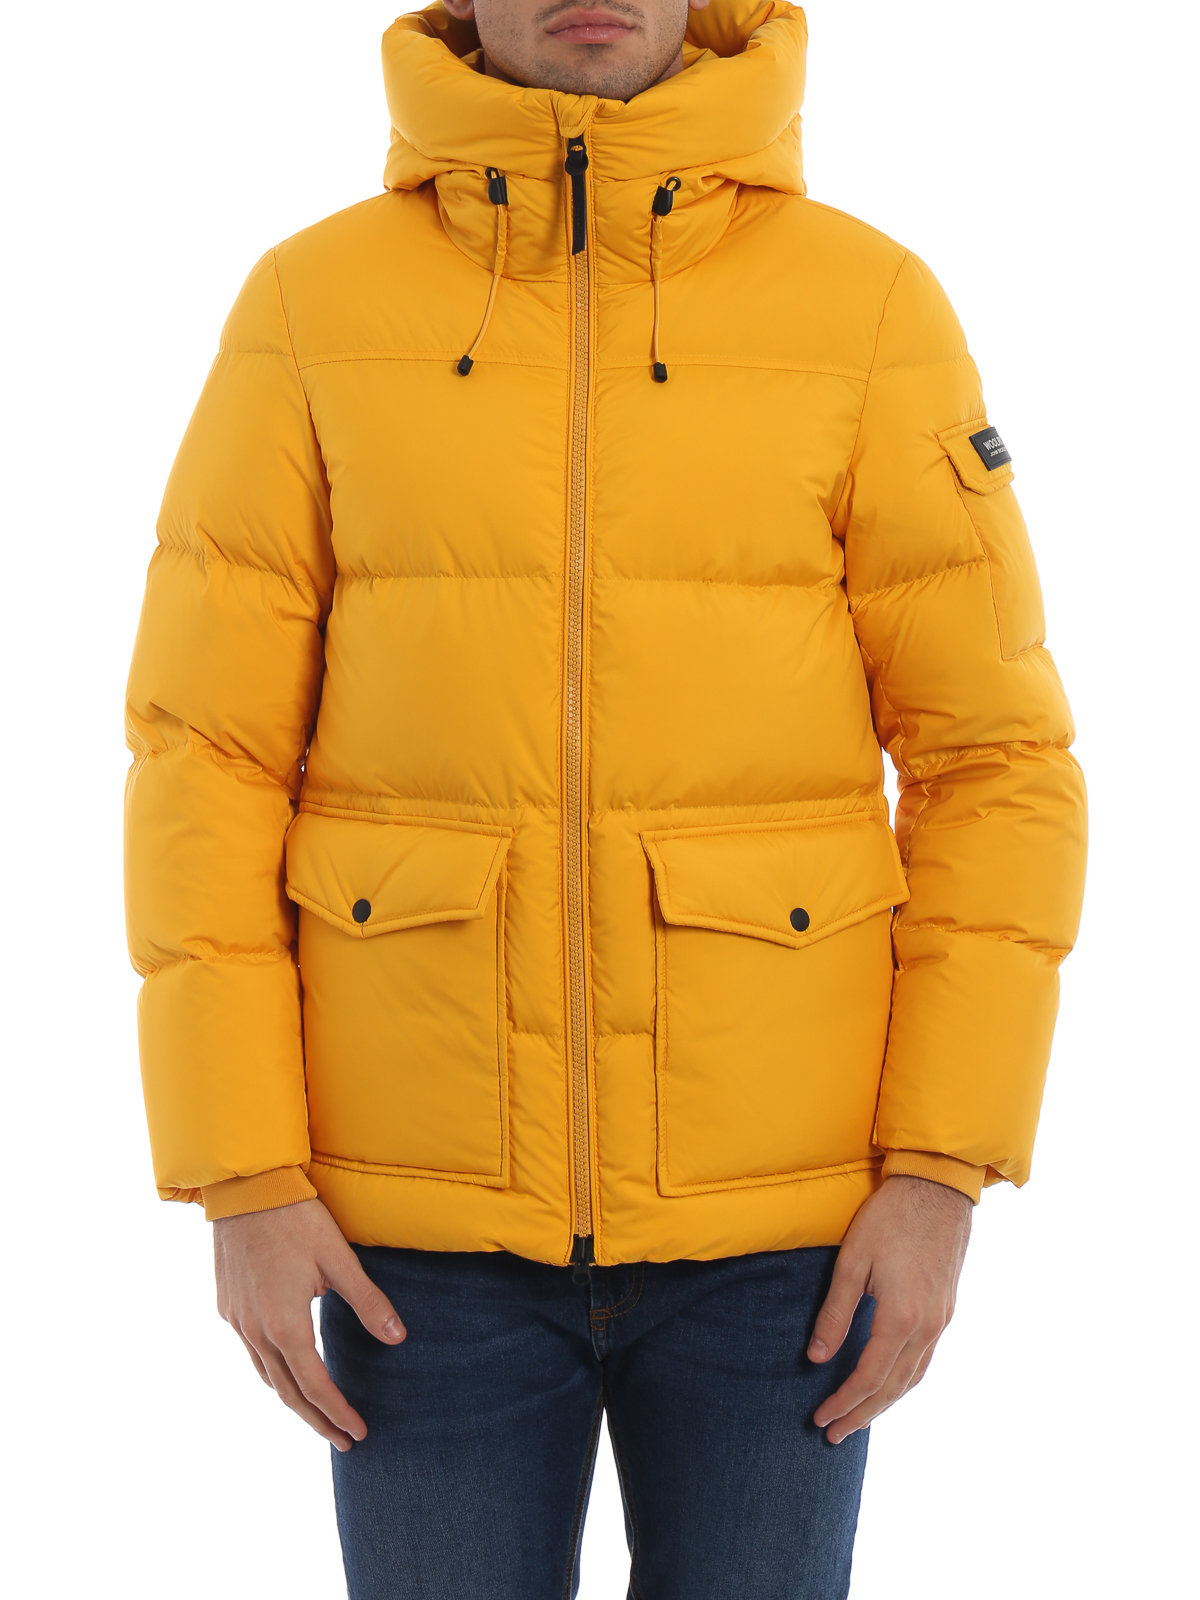 supreme yellow puffer jacket